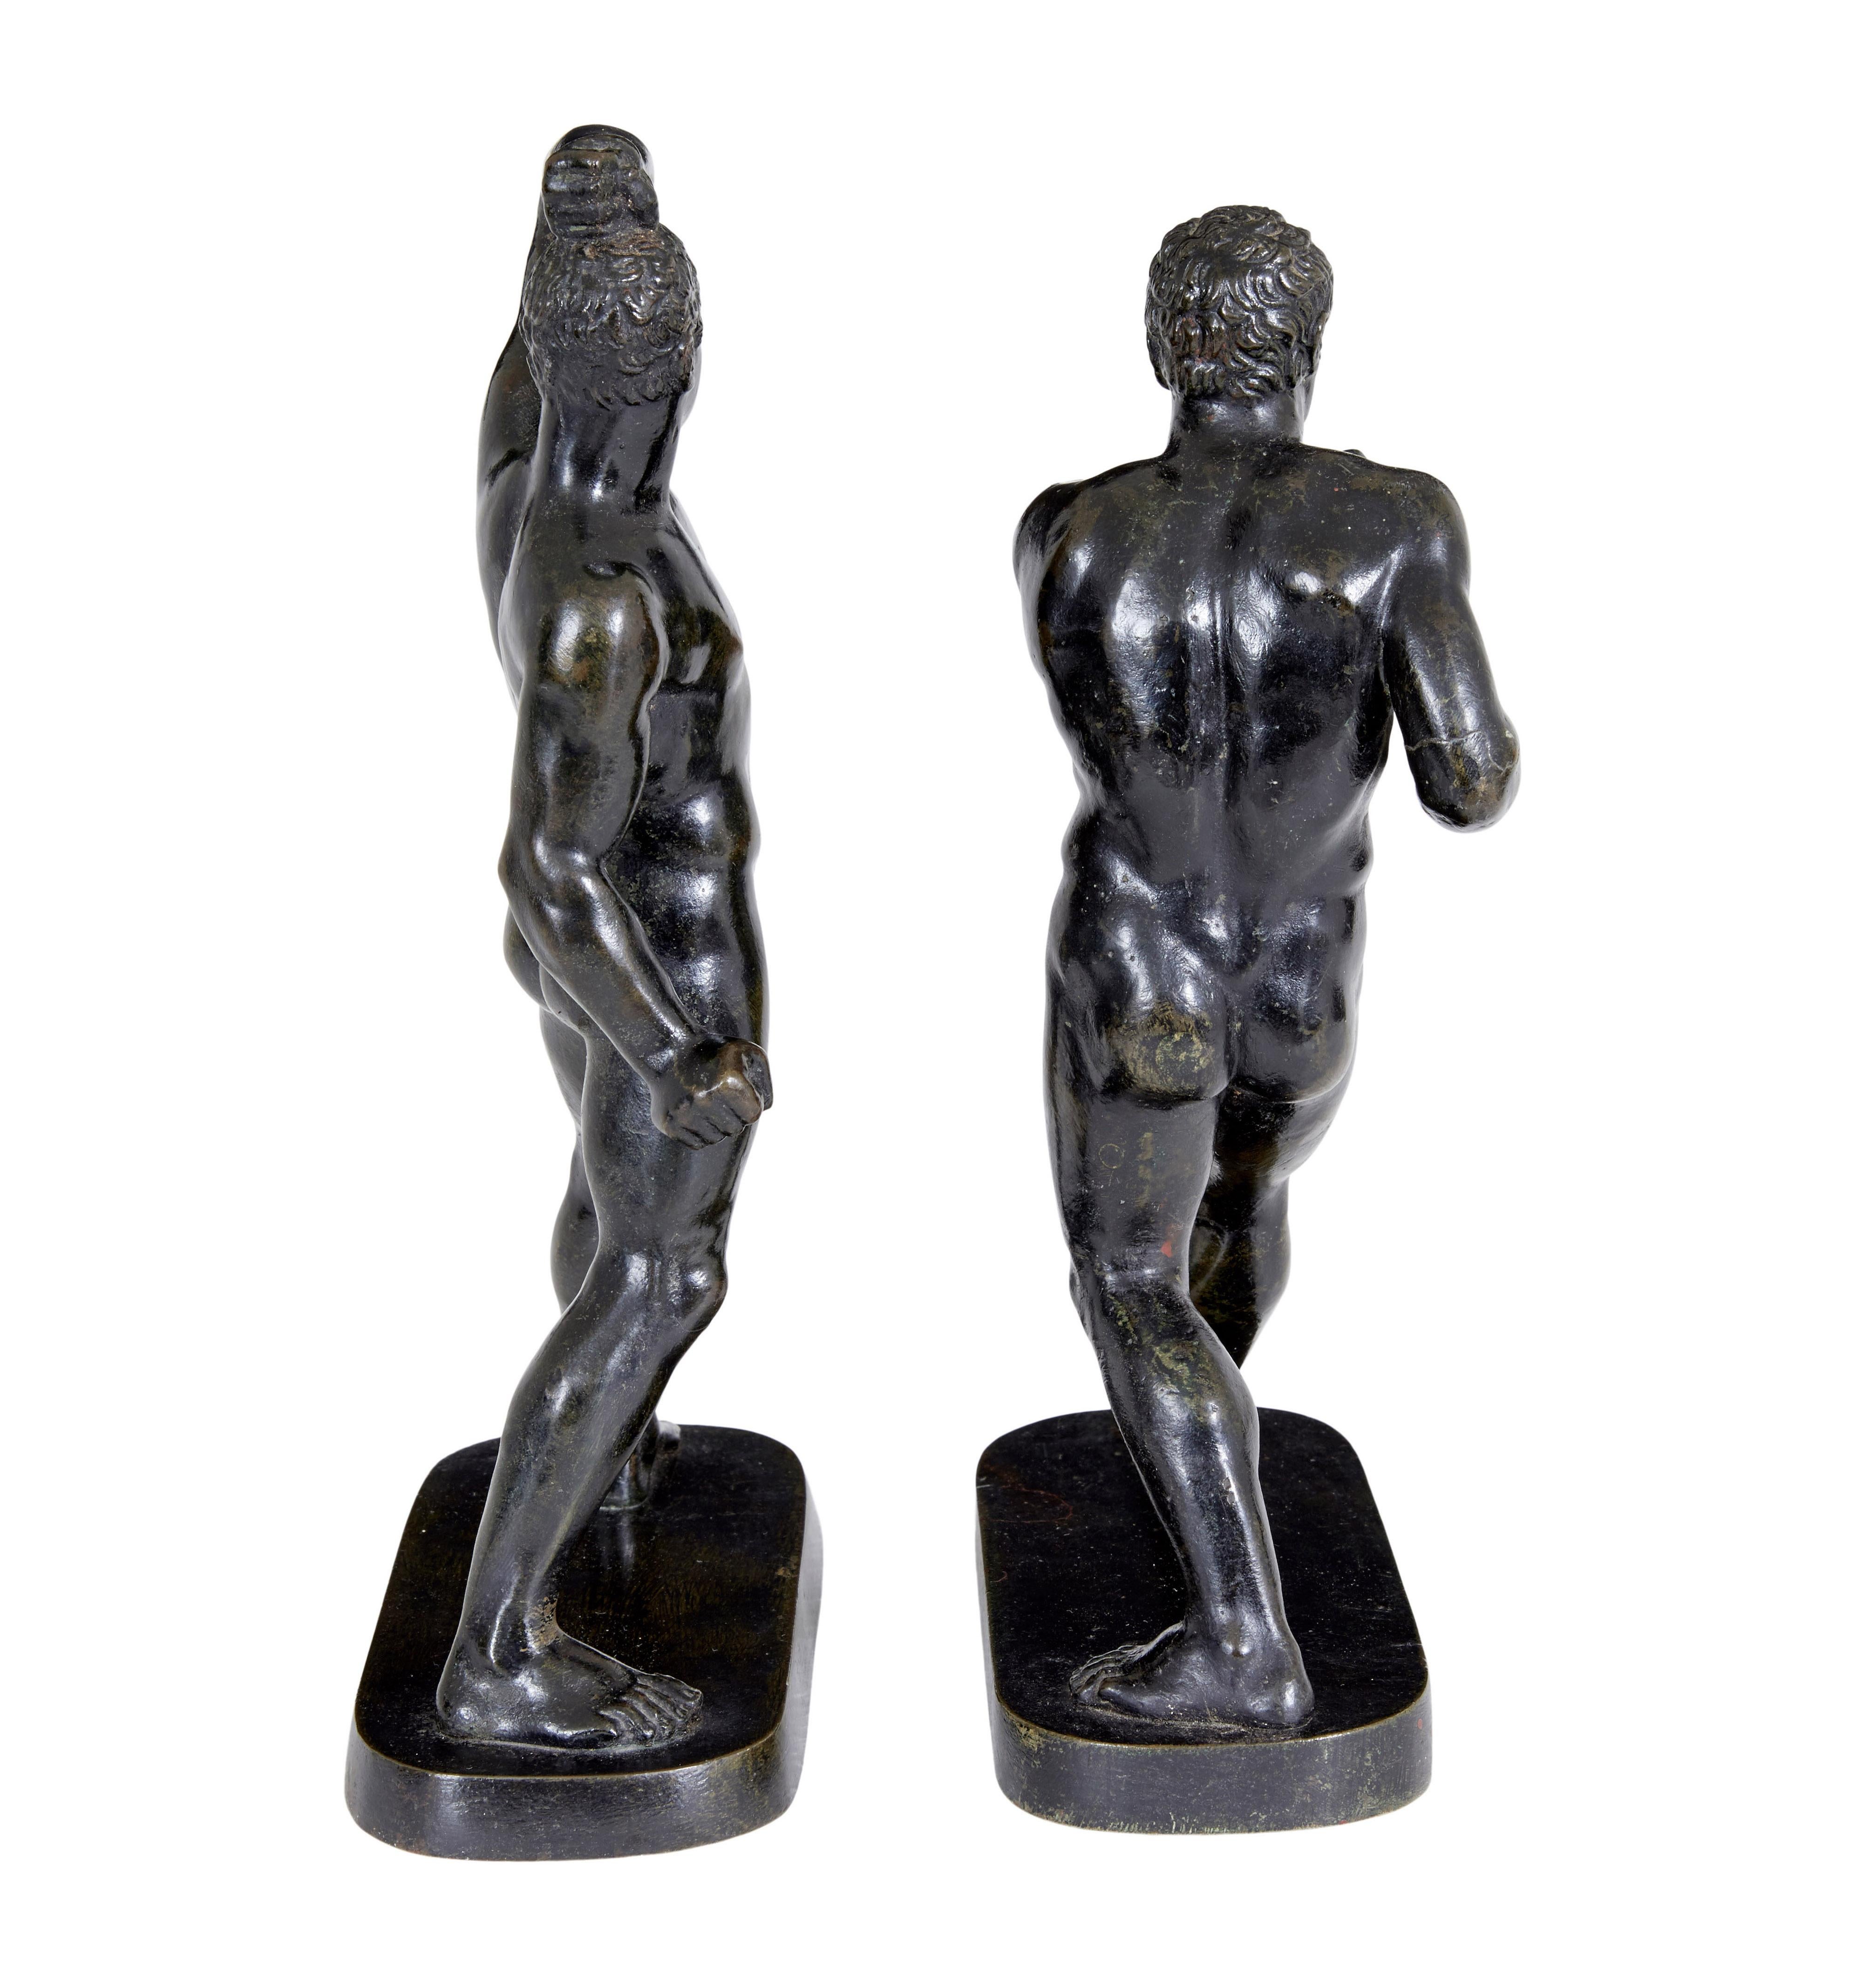 Italian Pair of 19th Century Bronze Athlete Figures After Canova